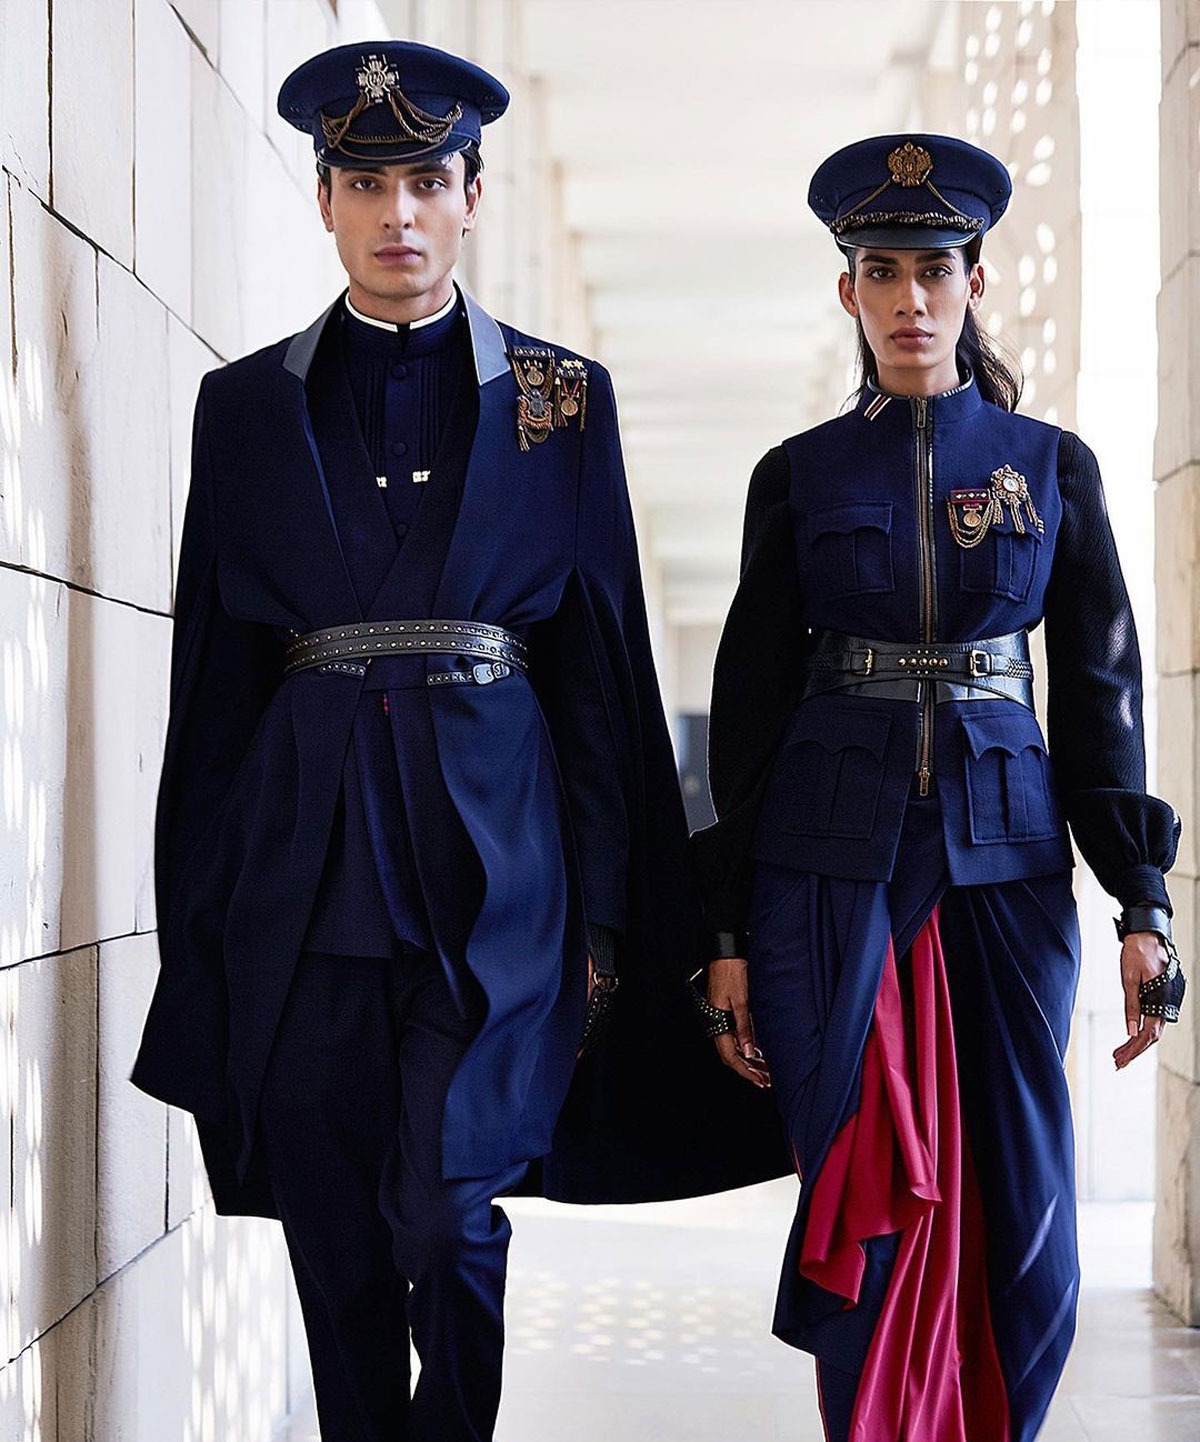 futuristic military dress uniforms